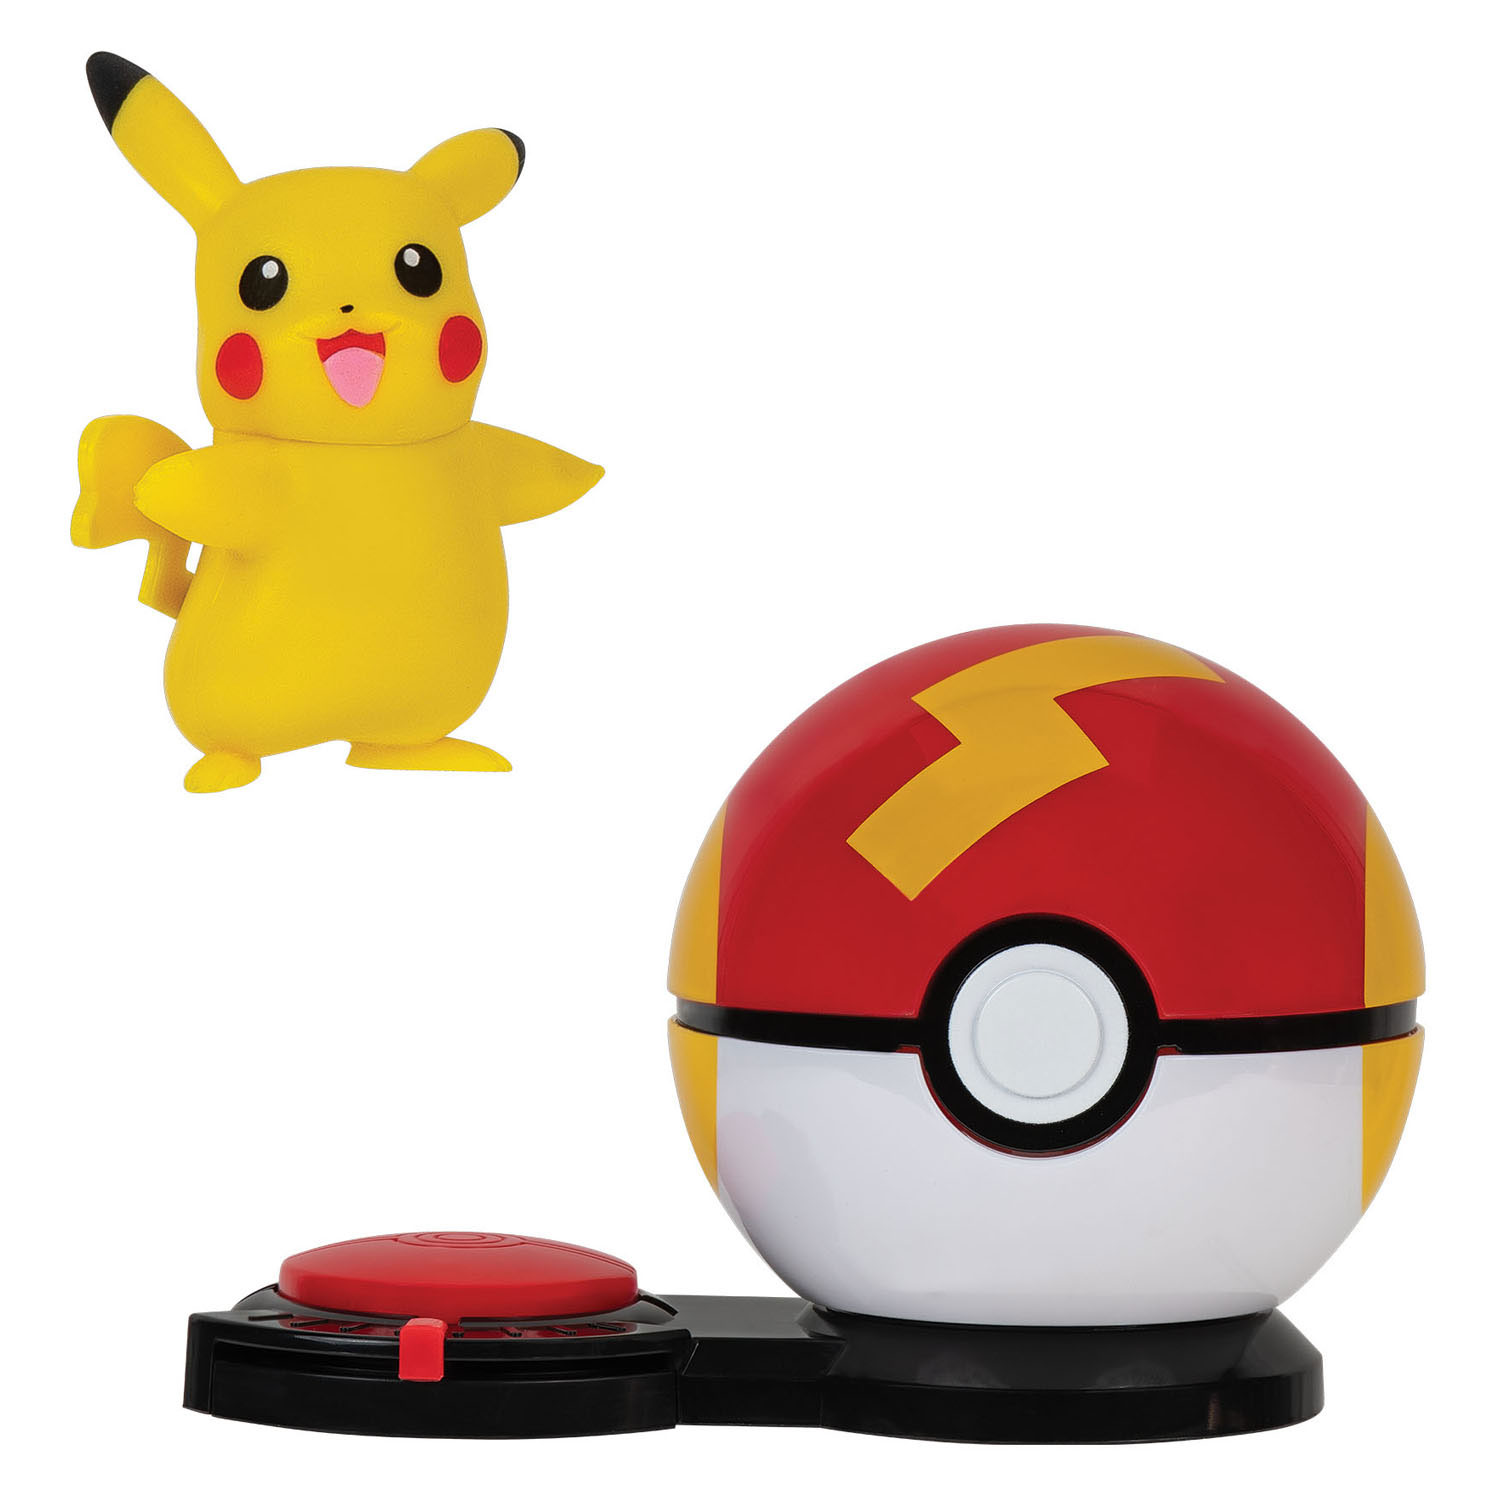 Pokémon-Überraschungsangriffsspiel-Spielset – Pikachu-Schnellball gegen Treecko-Heilball